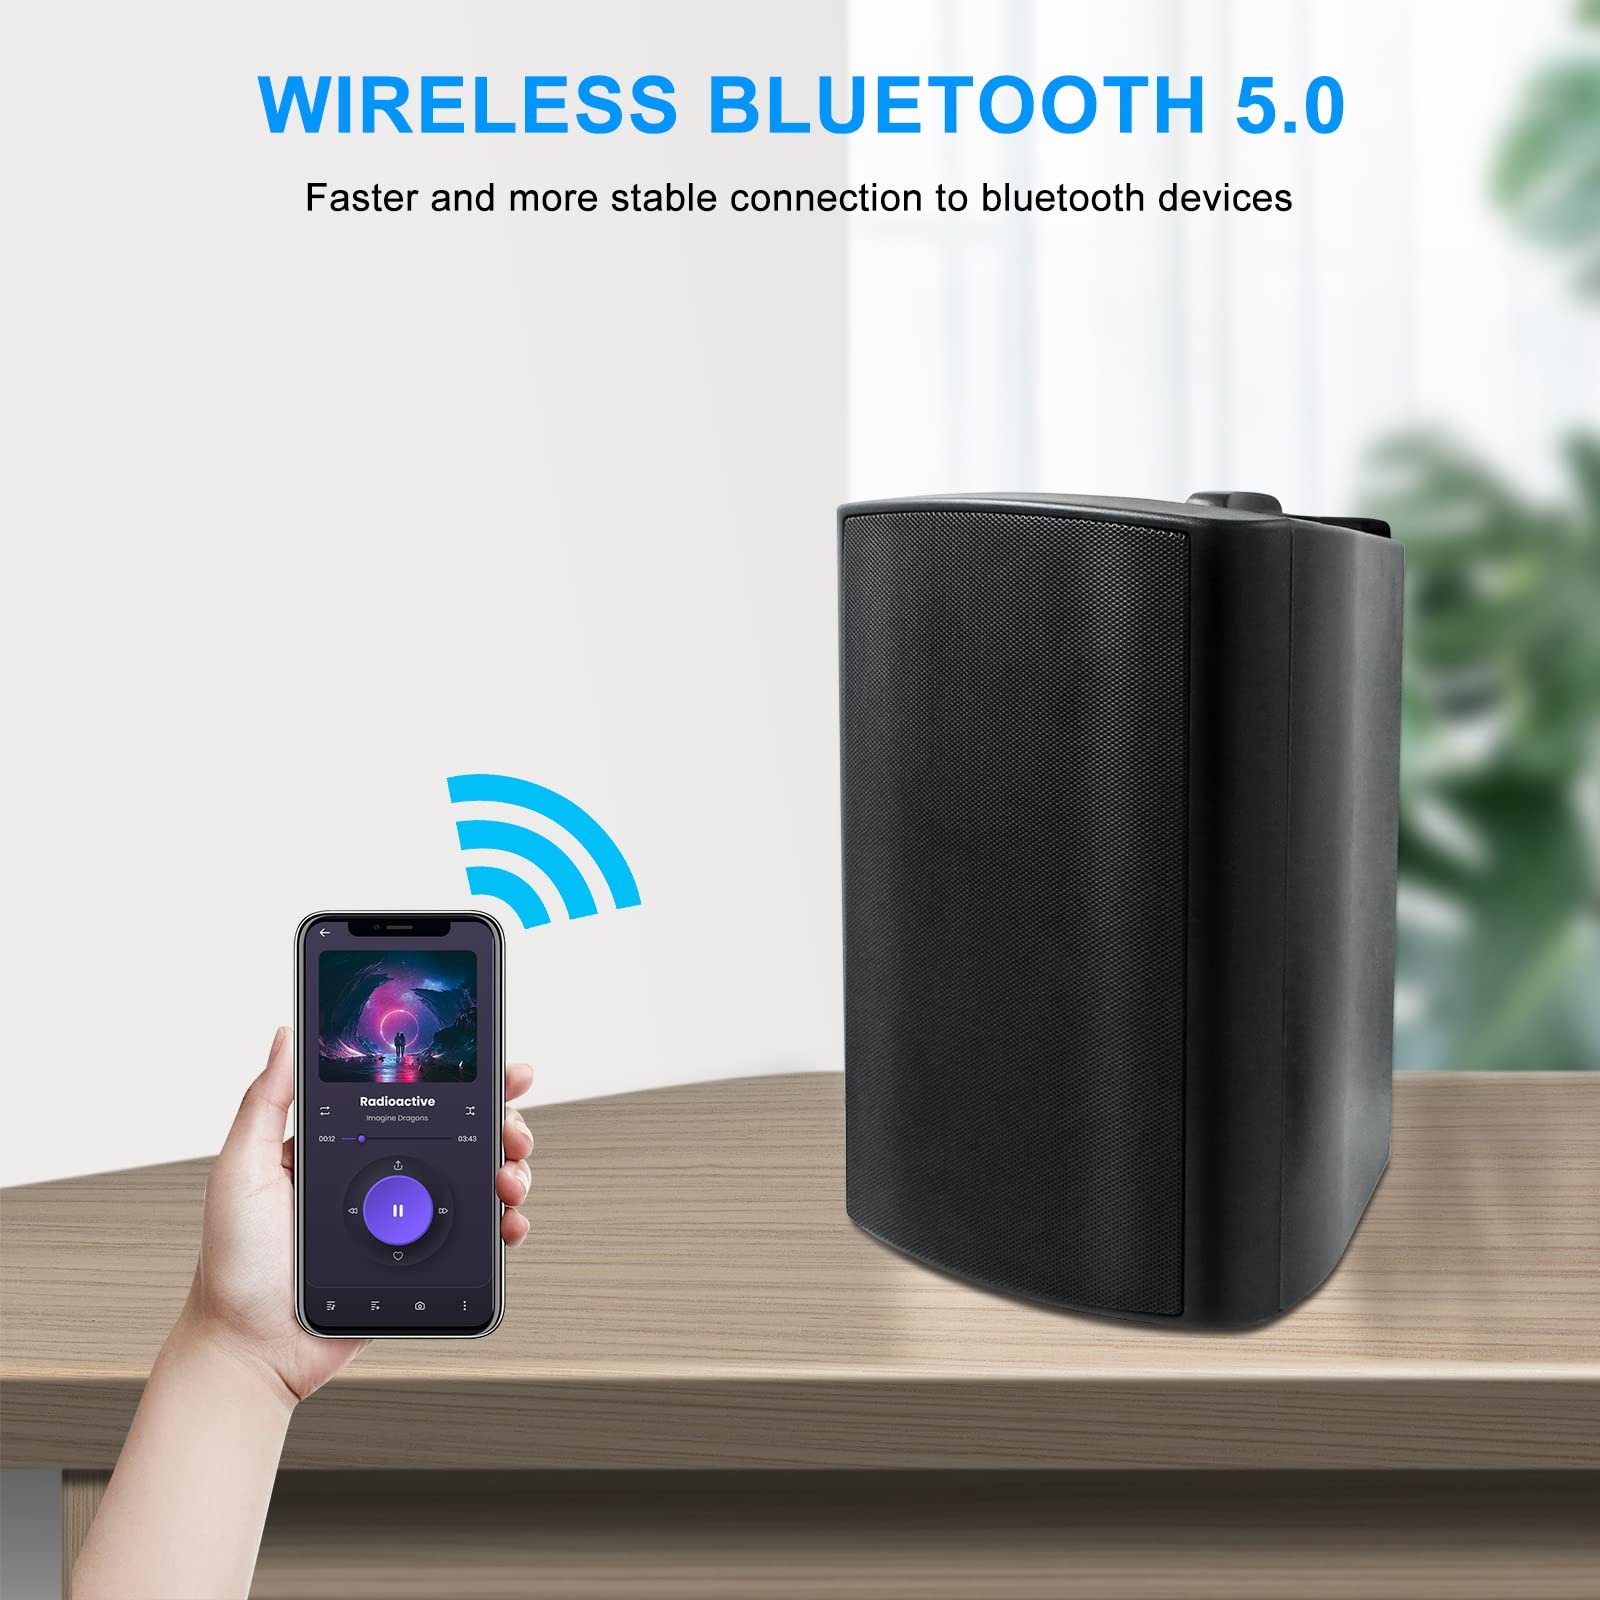 6.5" Bluetooth Outdoor Speakers 400 Watts ST-HOS-601BT